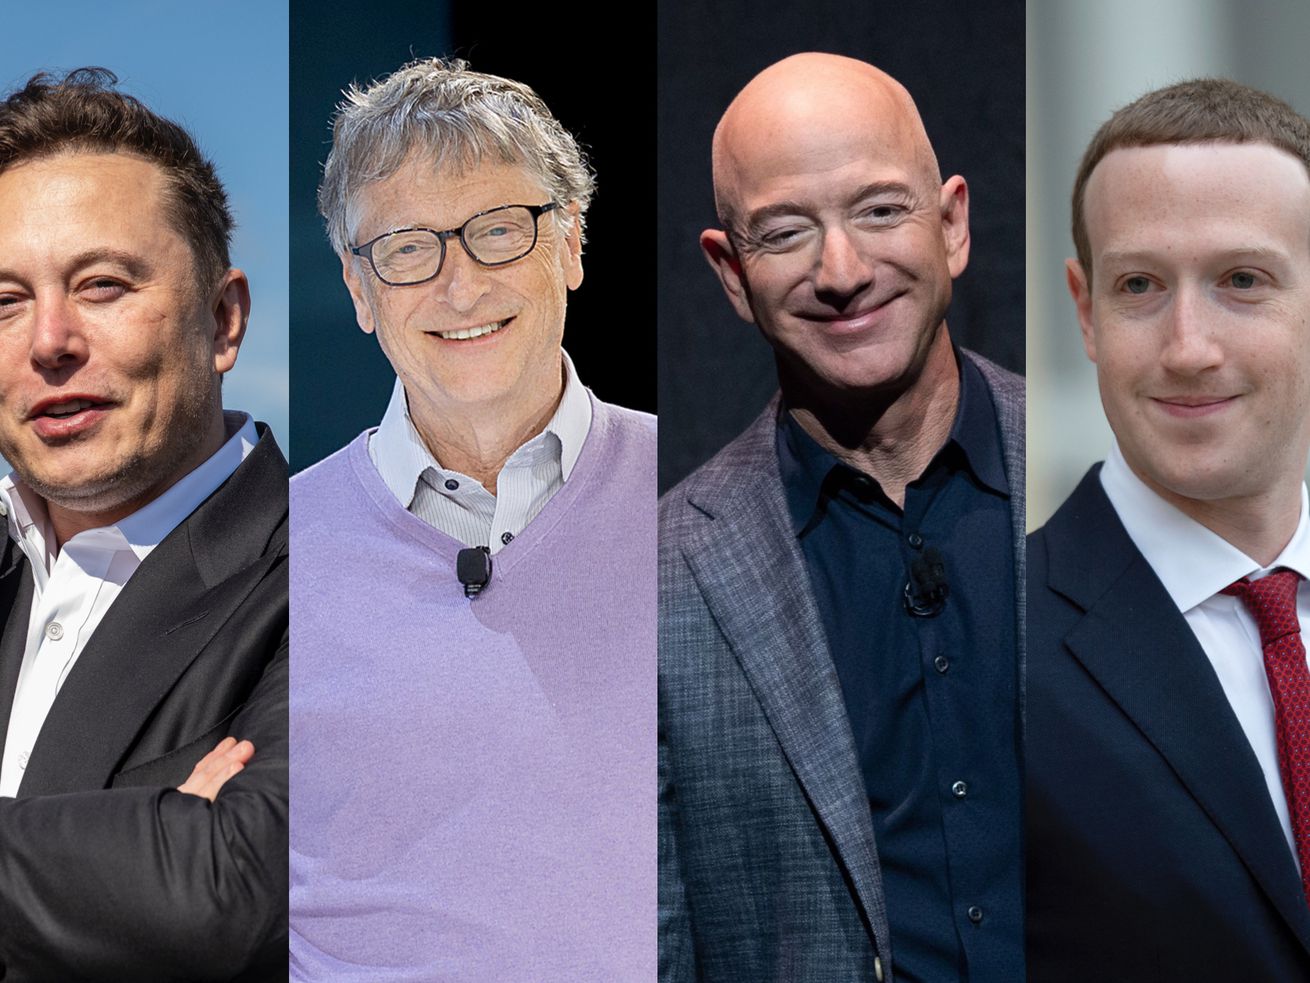 Photos of Elon Musk, Bill Gates, Jeff Bezos and Mark Zuckerberg.